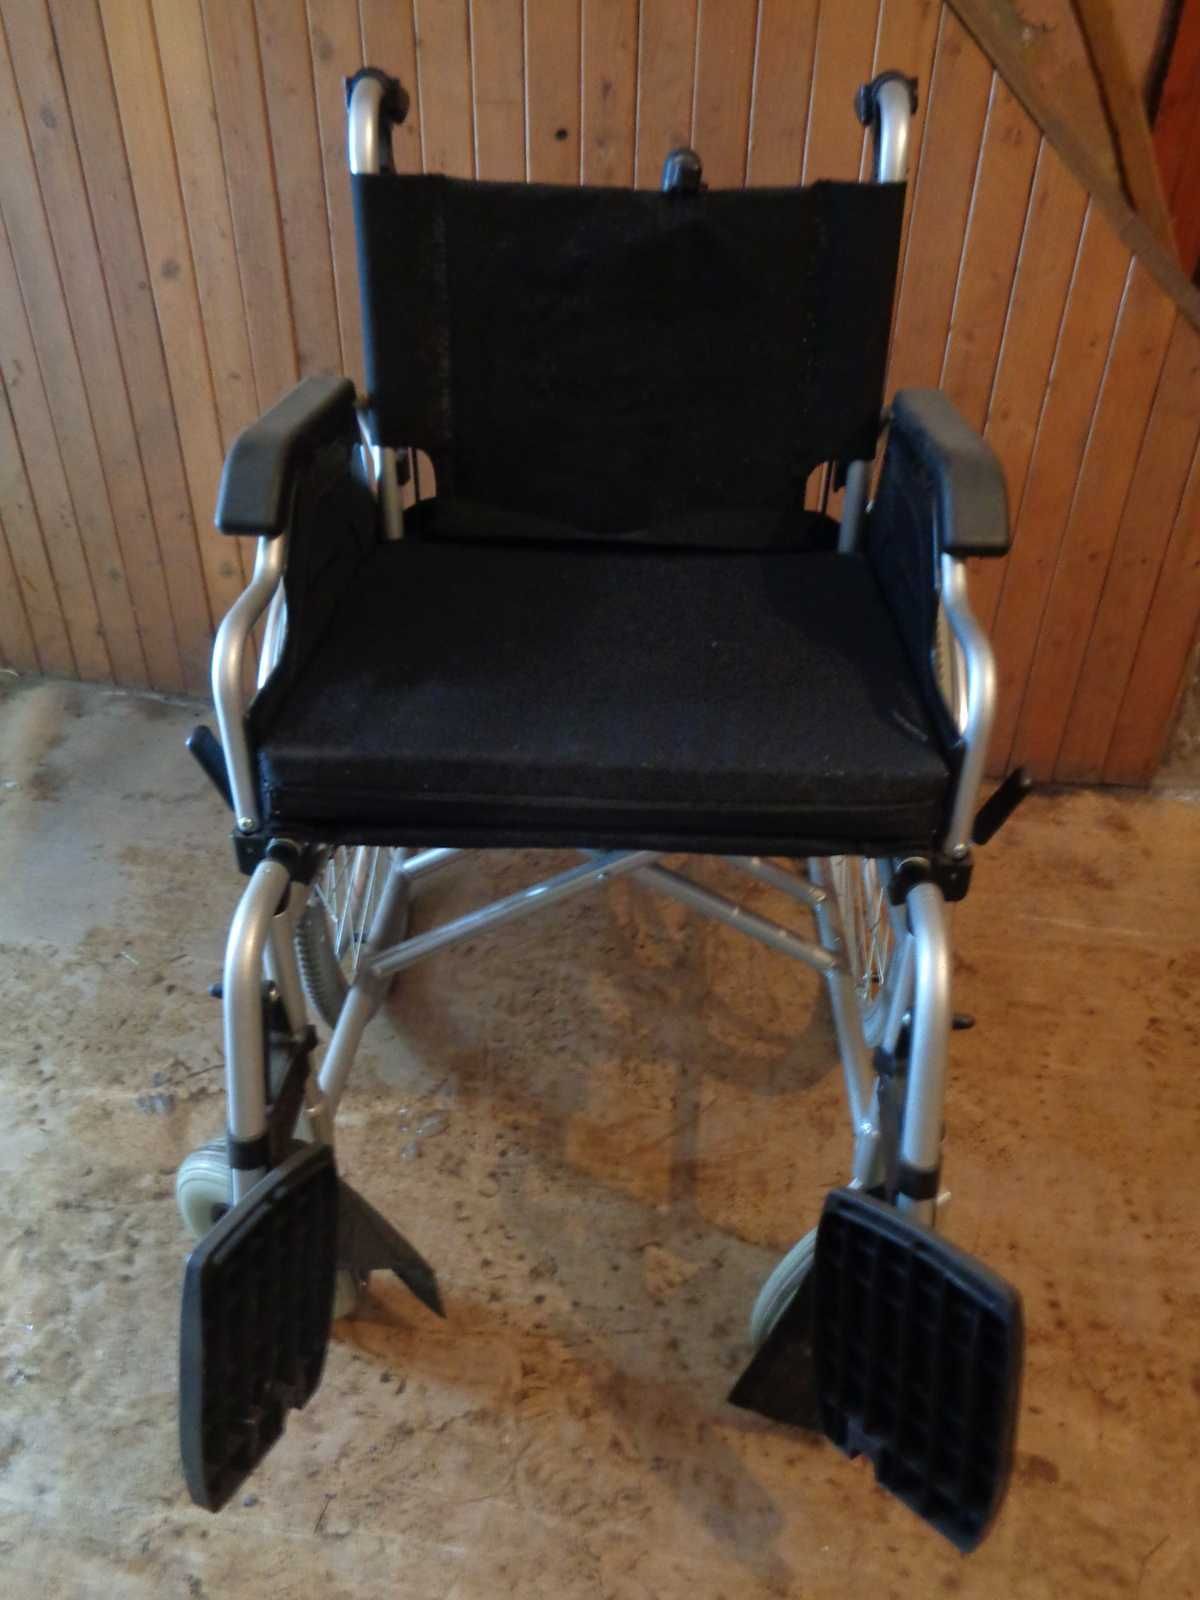 Wózek inwalidzki Timago